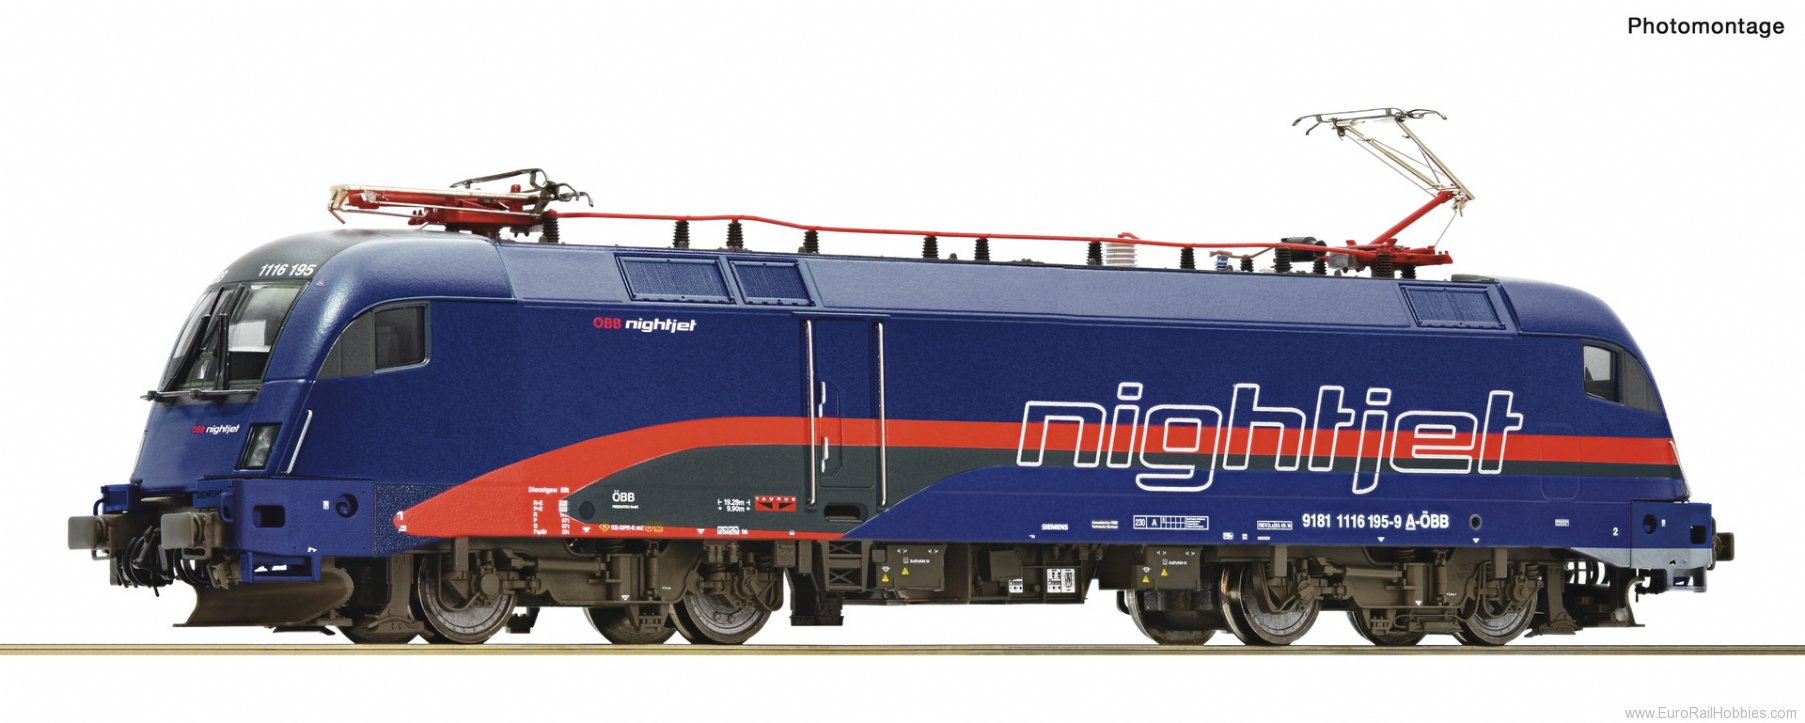 Roco 70496 Electric locomotive 1116 195-9 Nightjet, Ã